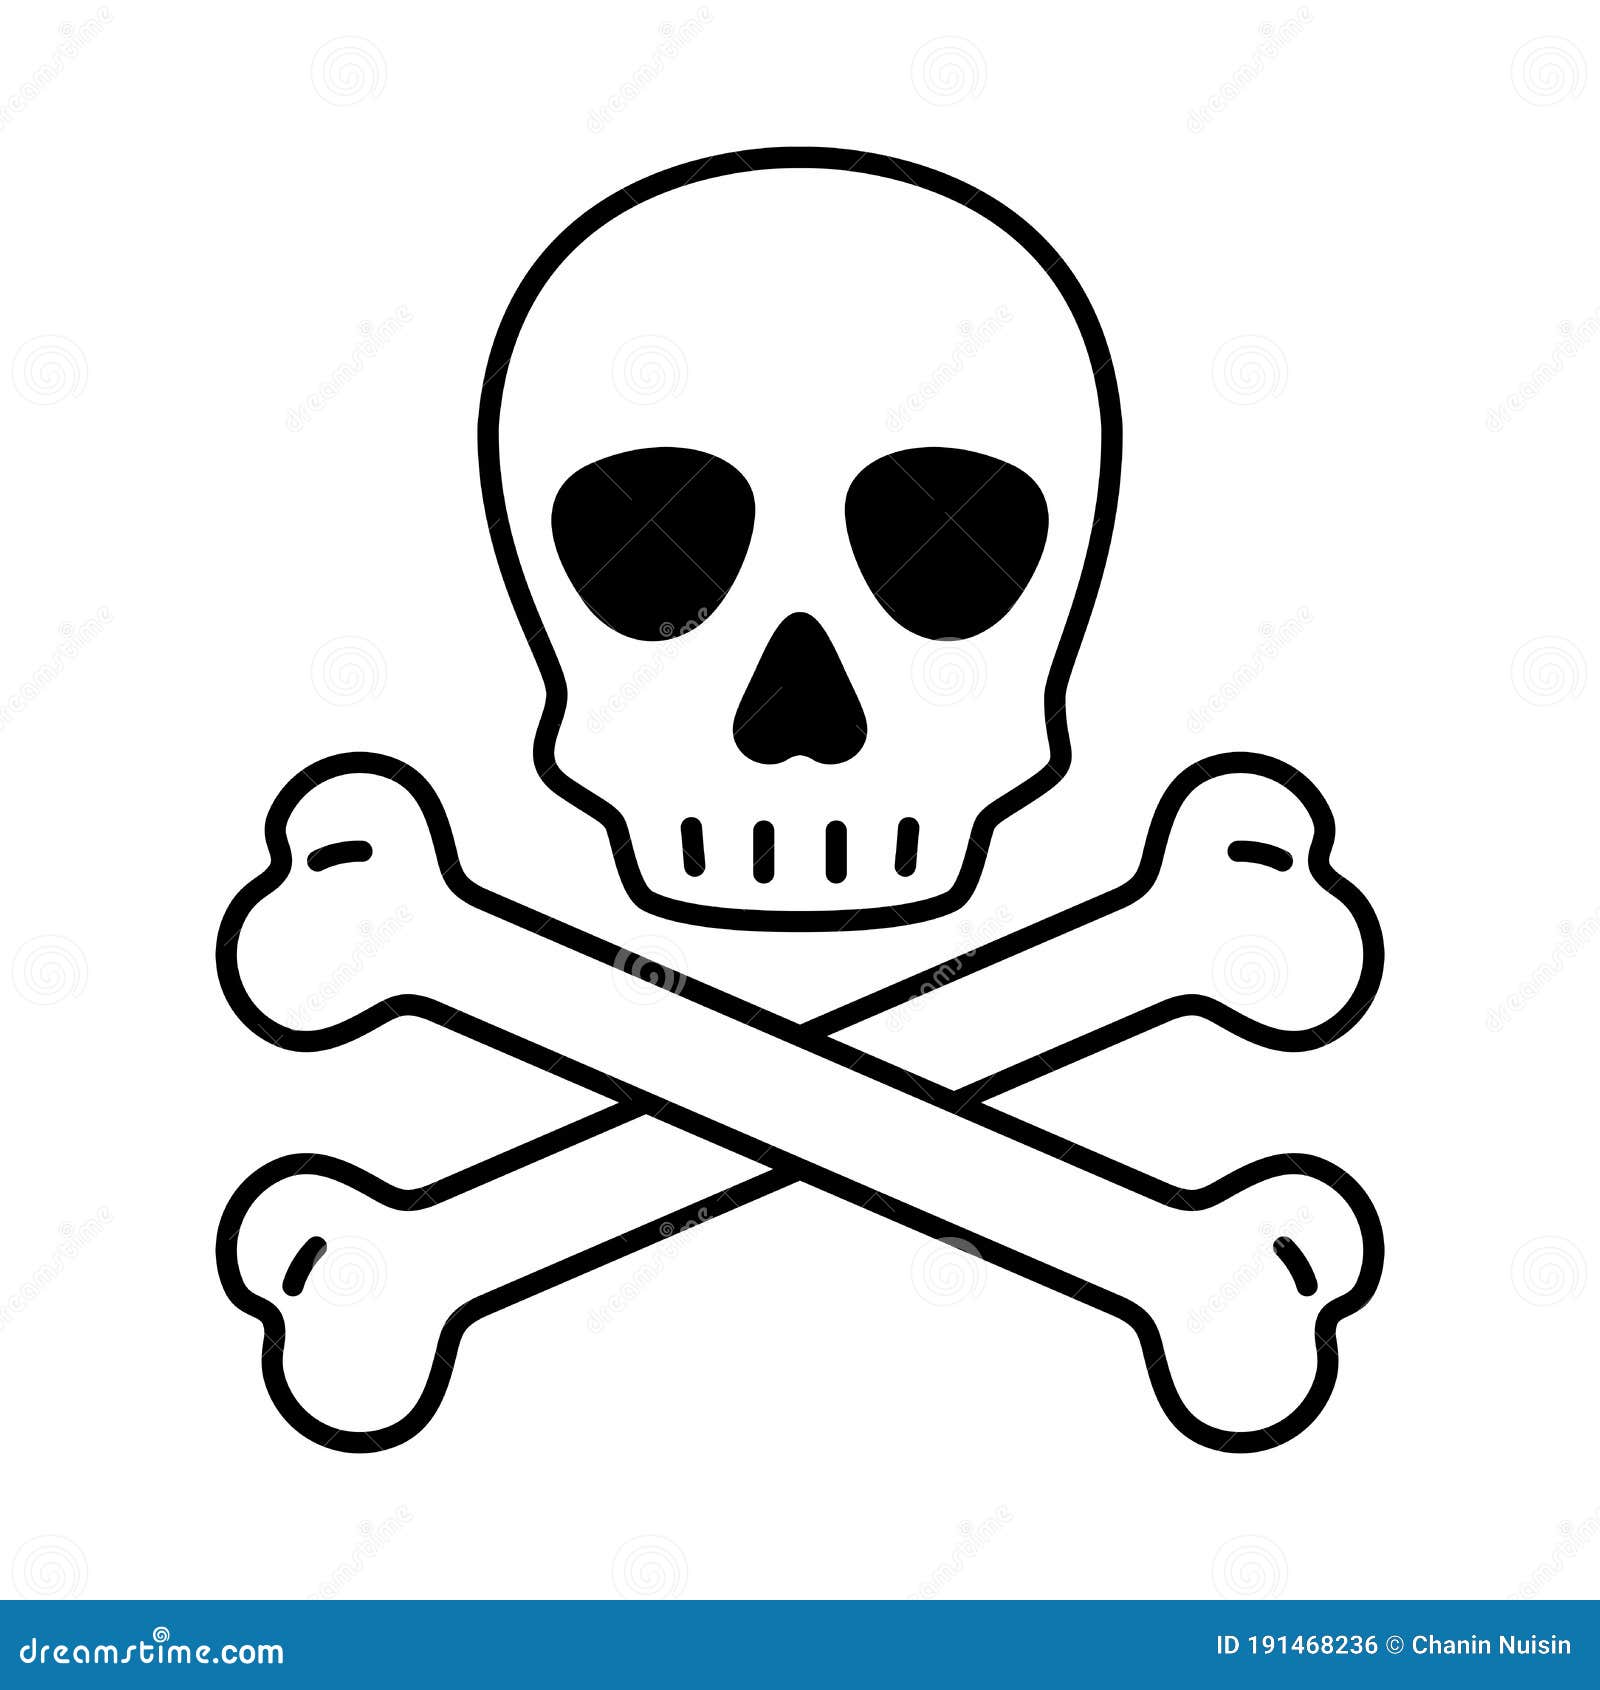 Skull and bones drawing Royalty Free Vector Image